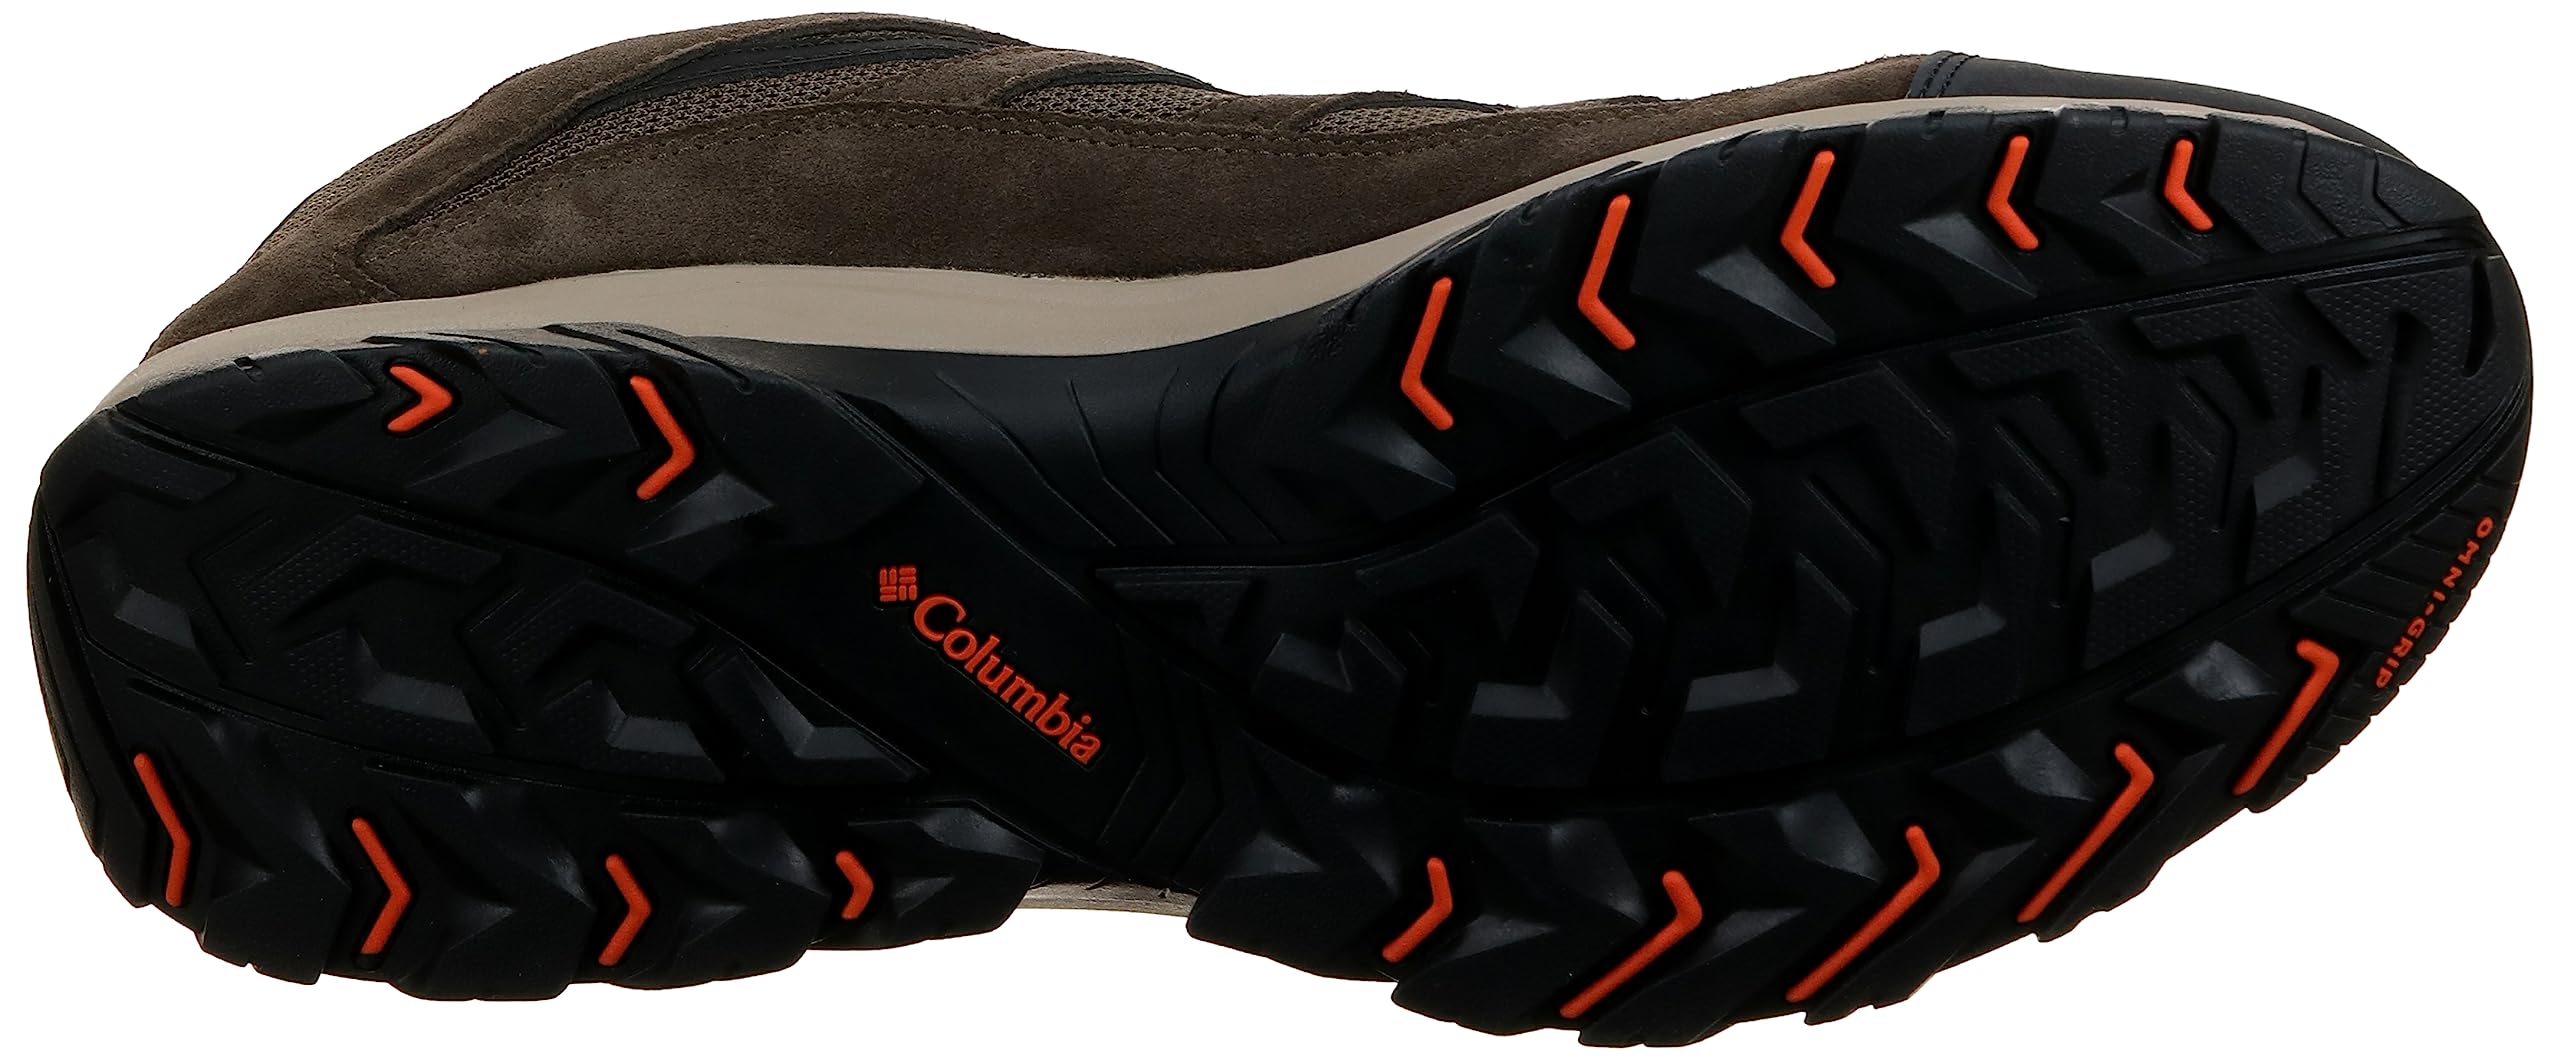 Columbia Men's Crestwood Hiking Shoe